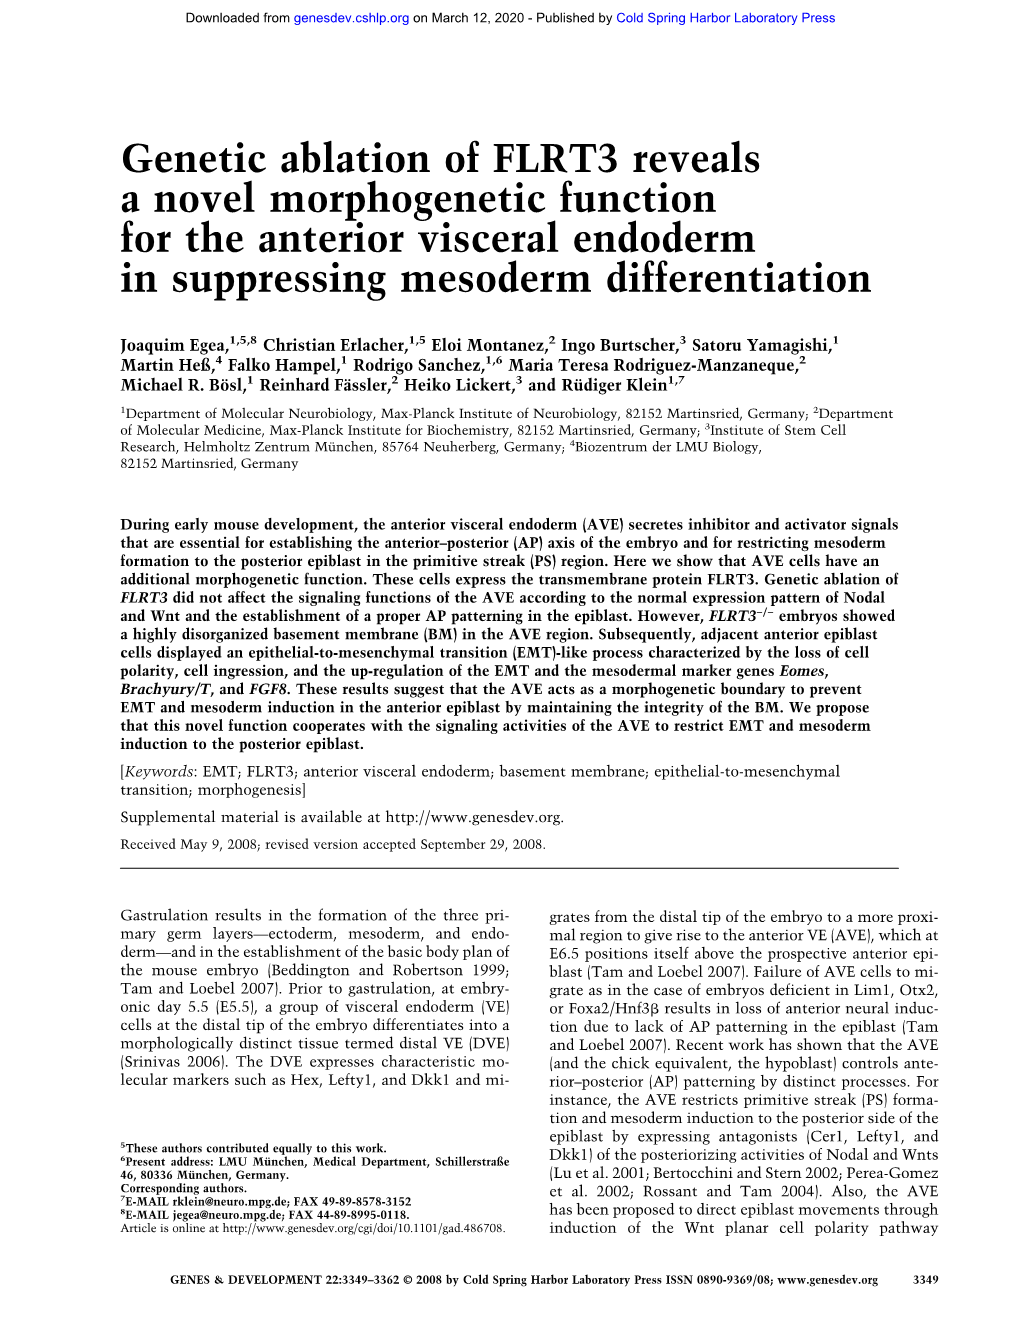 Genetic Ablation of FLRT3 Reveals a Novel Morphogenetic Function for the Anterior Visceral Endoderm in Suppressing Mesoderm Differentiation